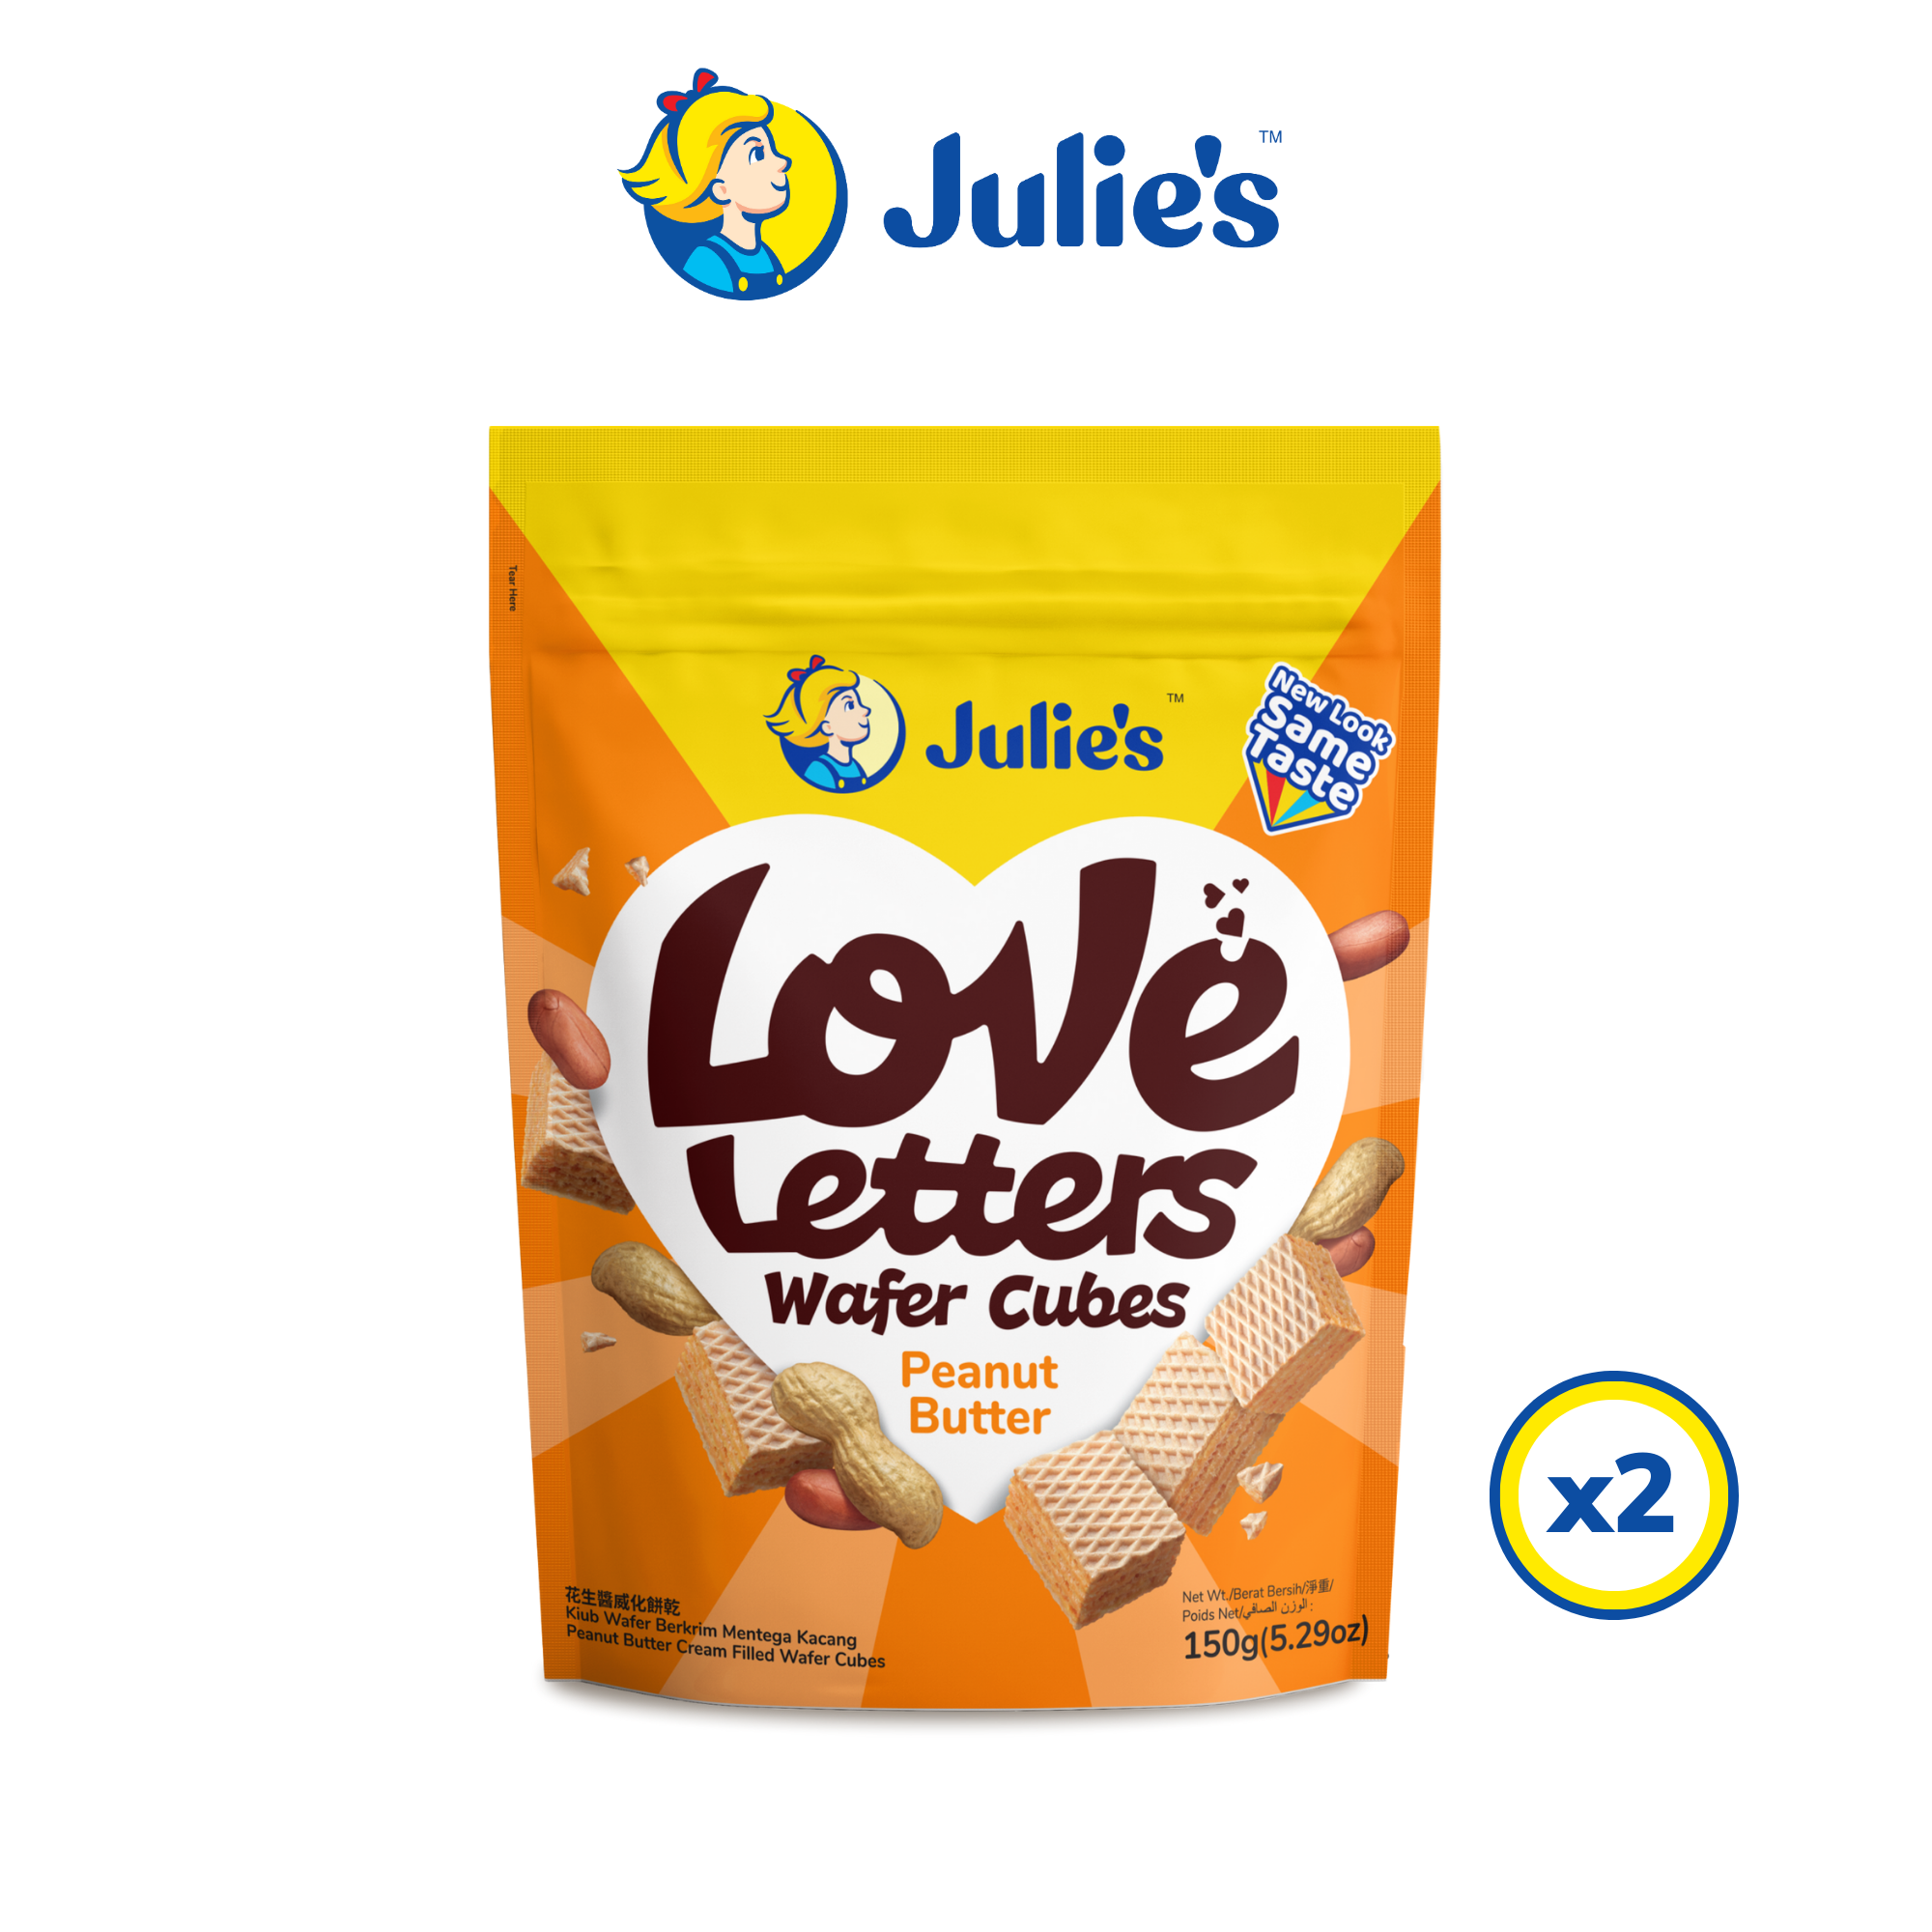 Julie\'s Love Letters Wafer Cubes Peanut Butter 150g x 2 packs